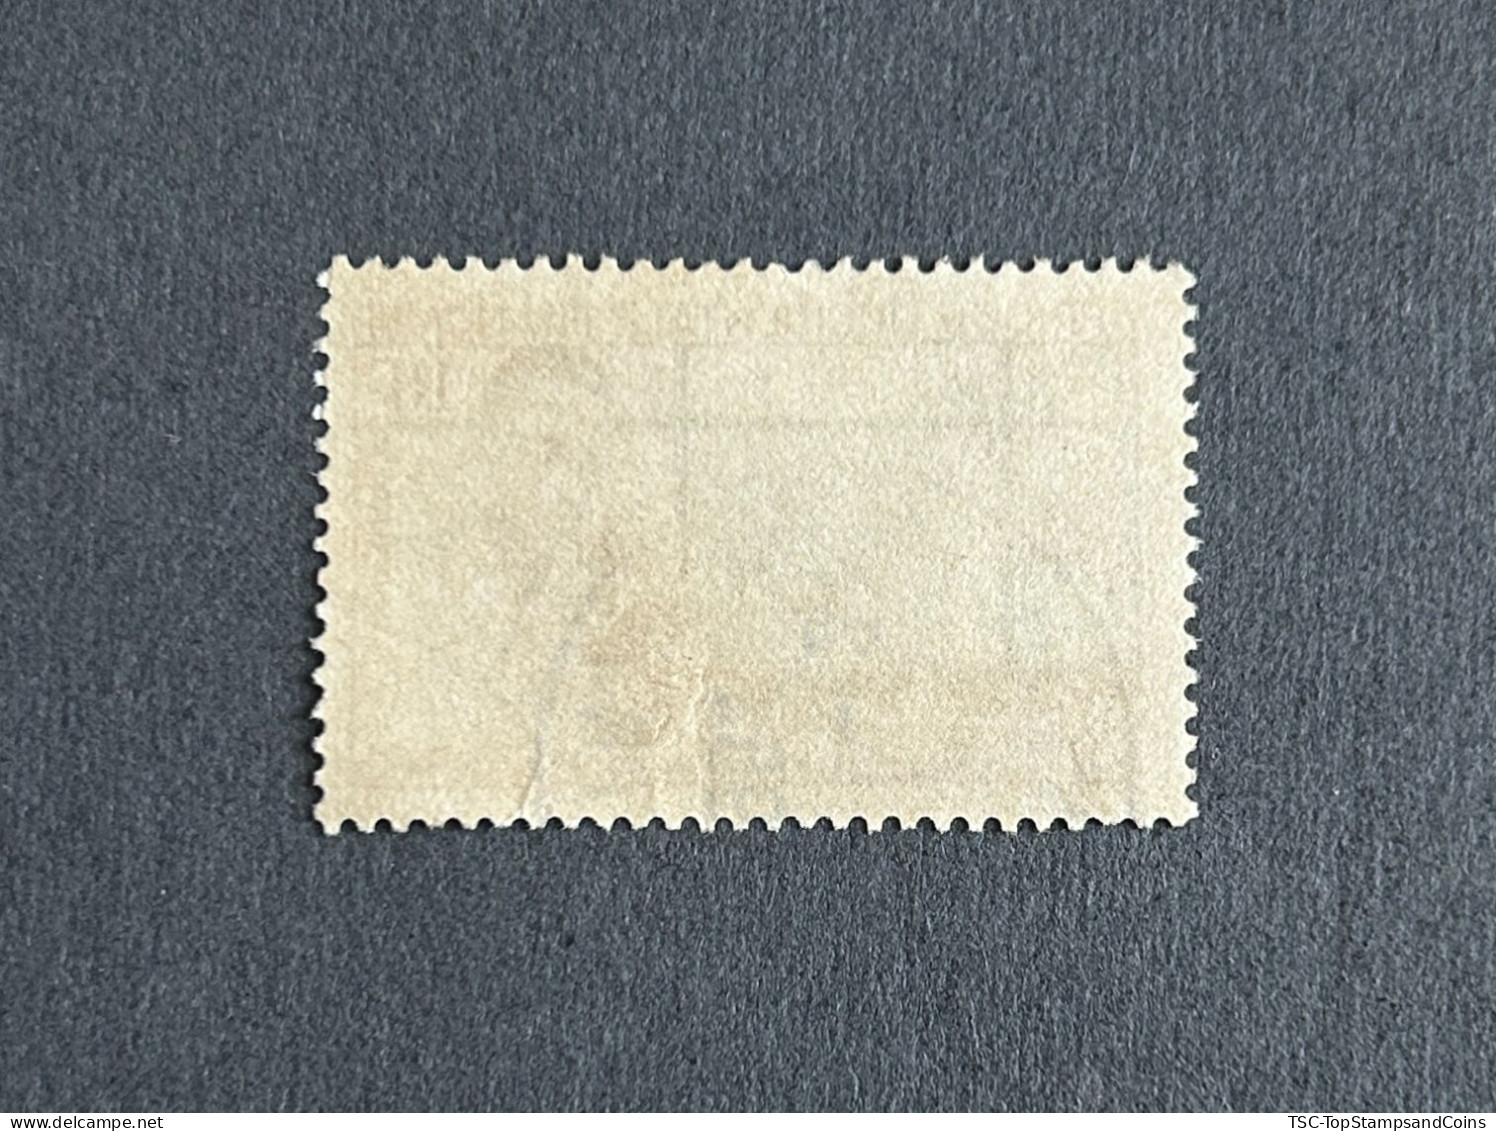 FRAWA0048U2 - Local People - Medical Laboratory - 15 F Used Stamp - AOF - 1953 - Oblitérés